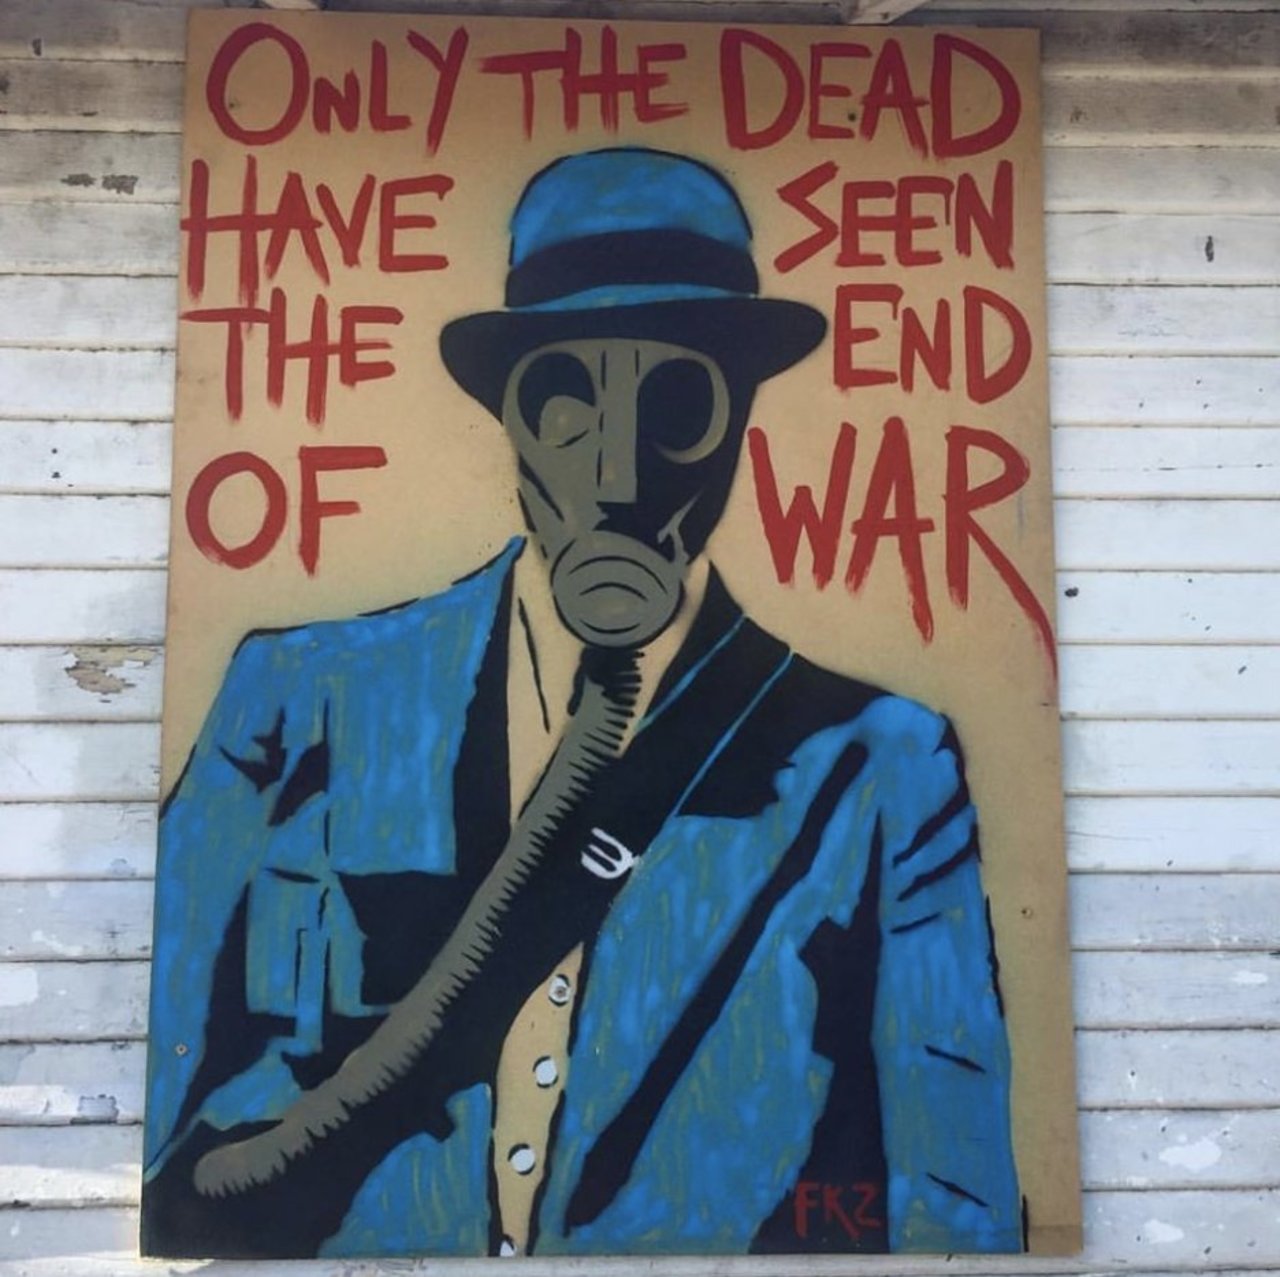 "Only the Dead Have Seen the End of War" by Fallen_Kingz #streetart #mural #graffiti #art https://t.co/4szKN8yDaM